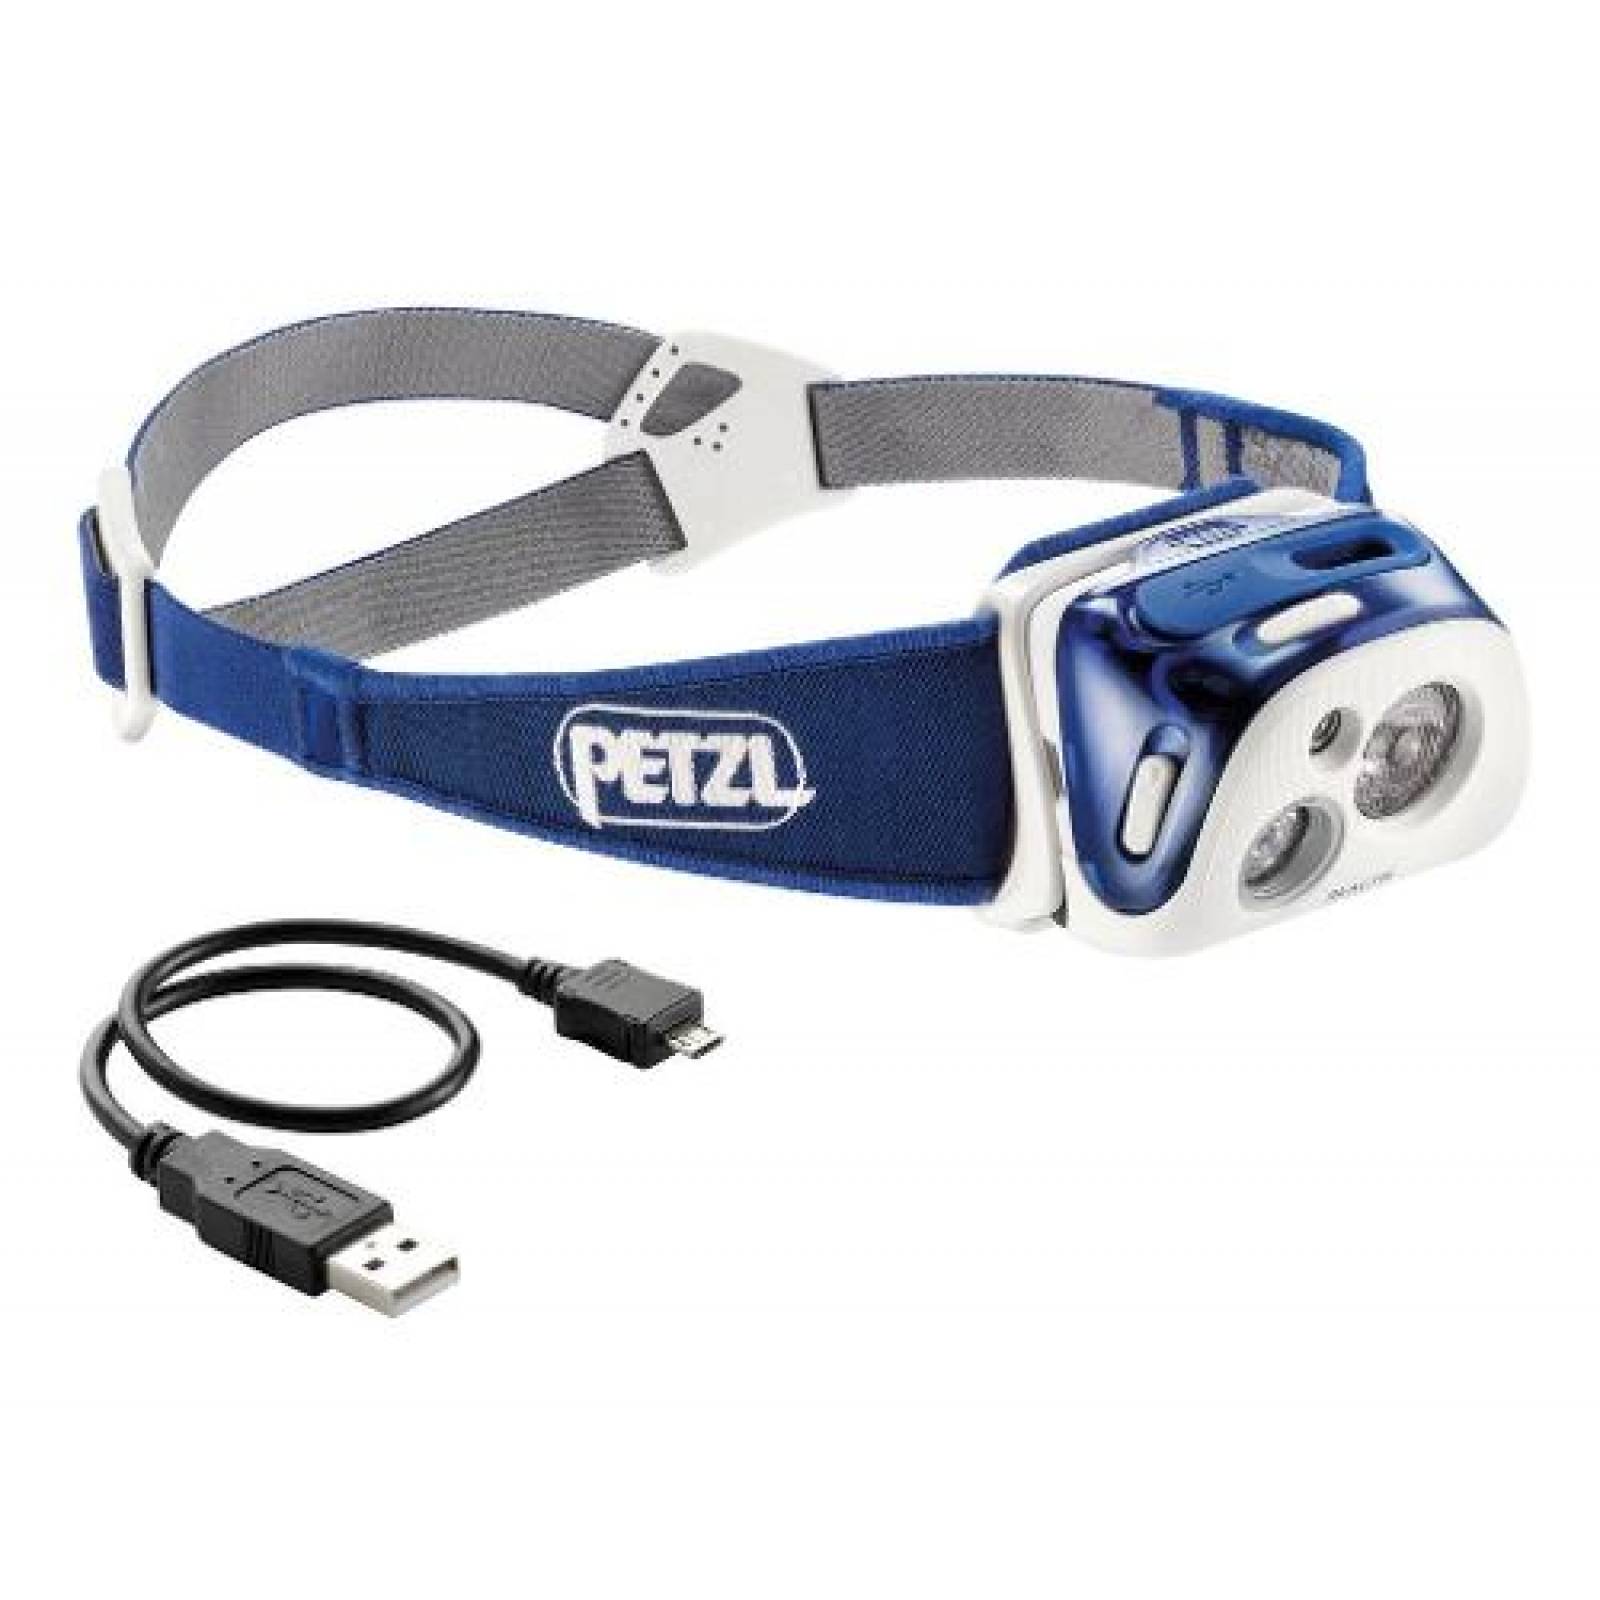 Linterna Frontal Reactik Recargable Inteligente Azul Petzl